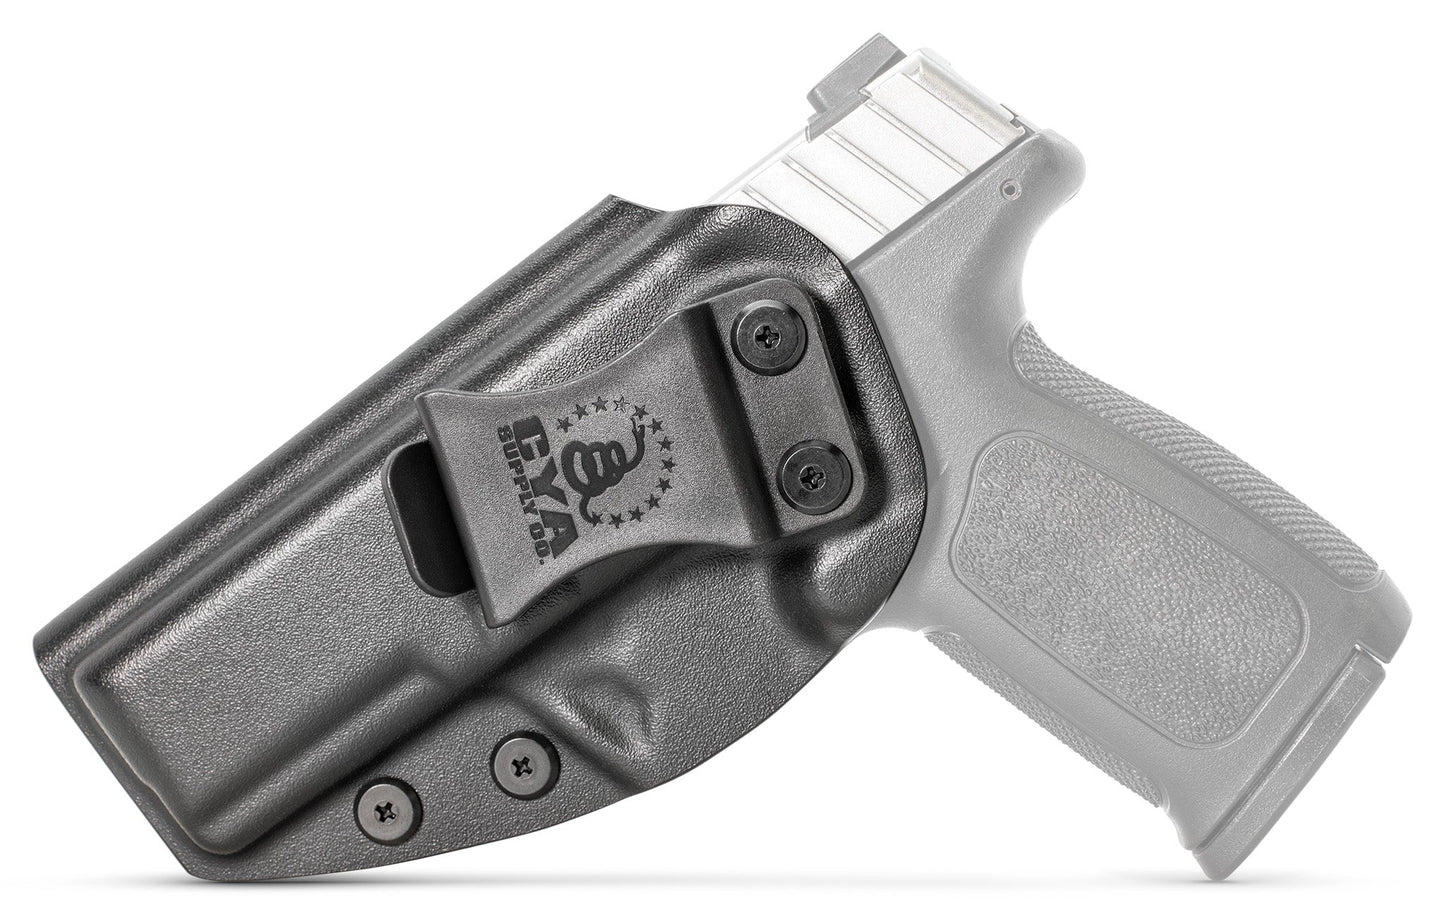 Smith & Wesson SD9 VE Holster | Base IWB | CYA Supply Co. CYA Supply Co.